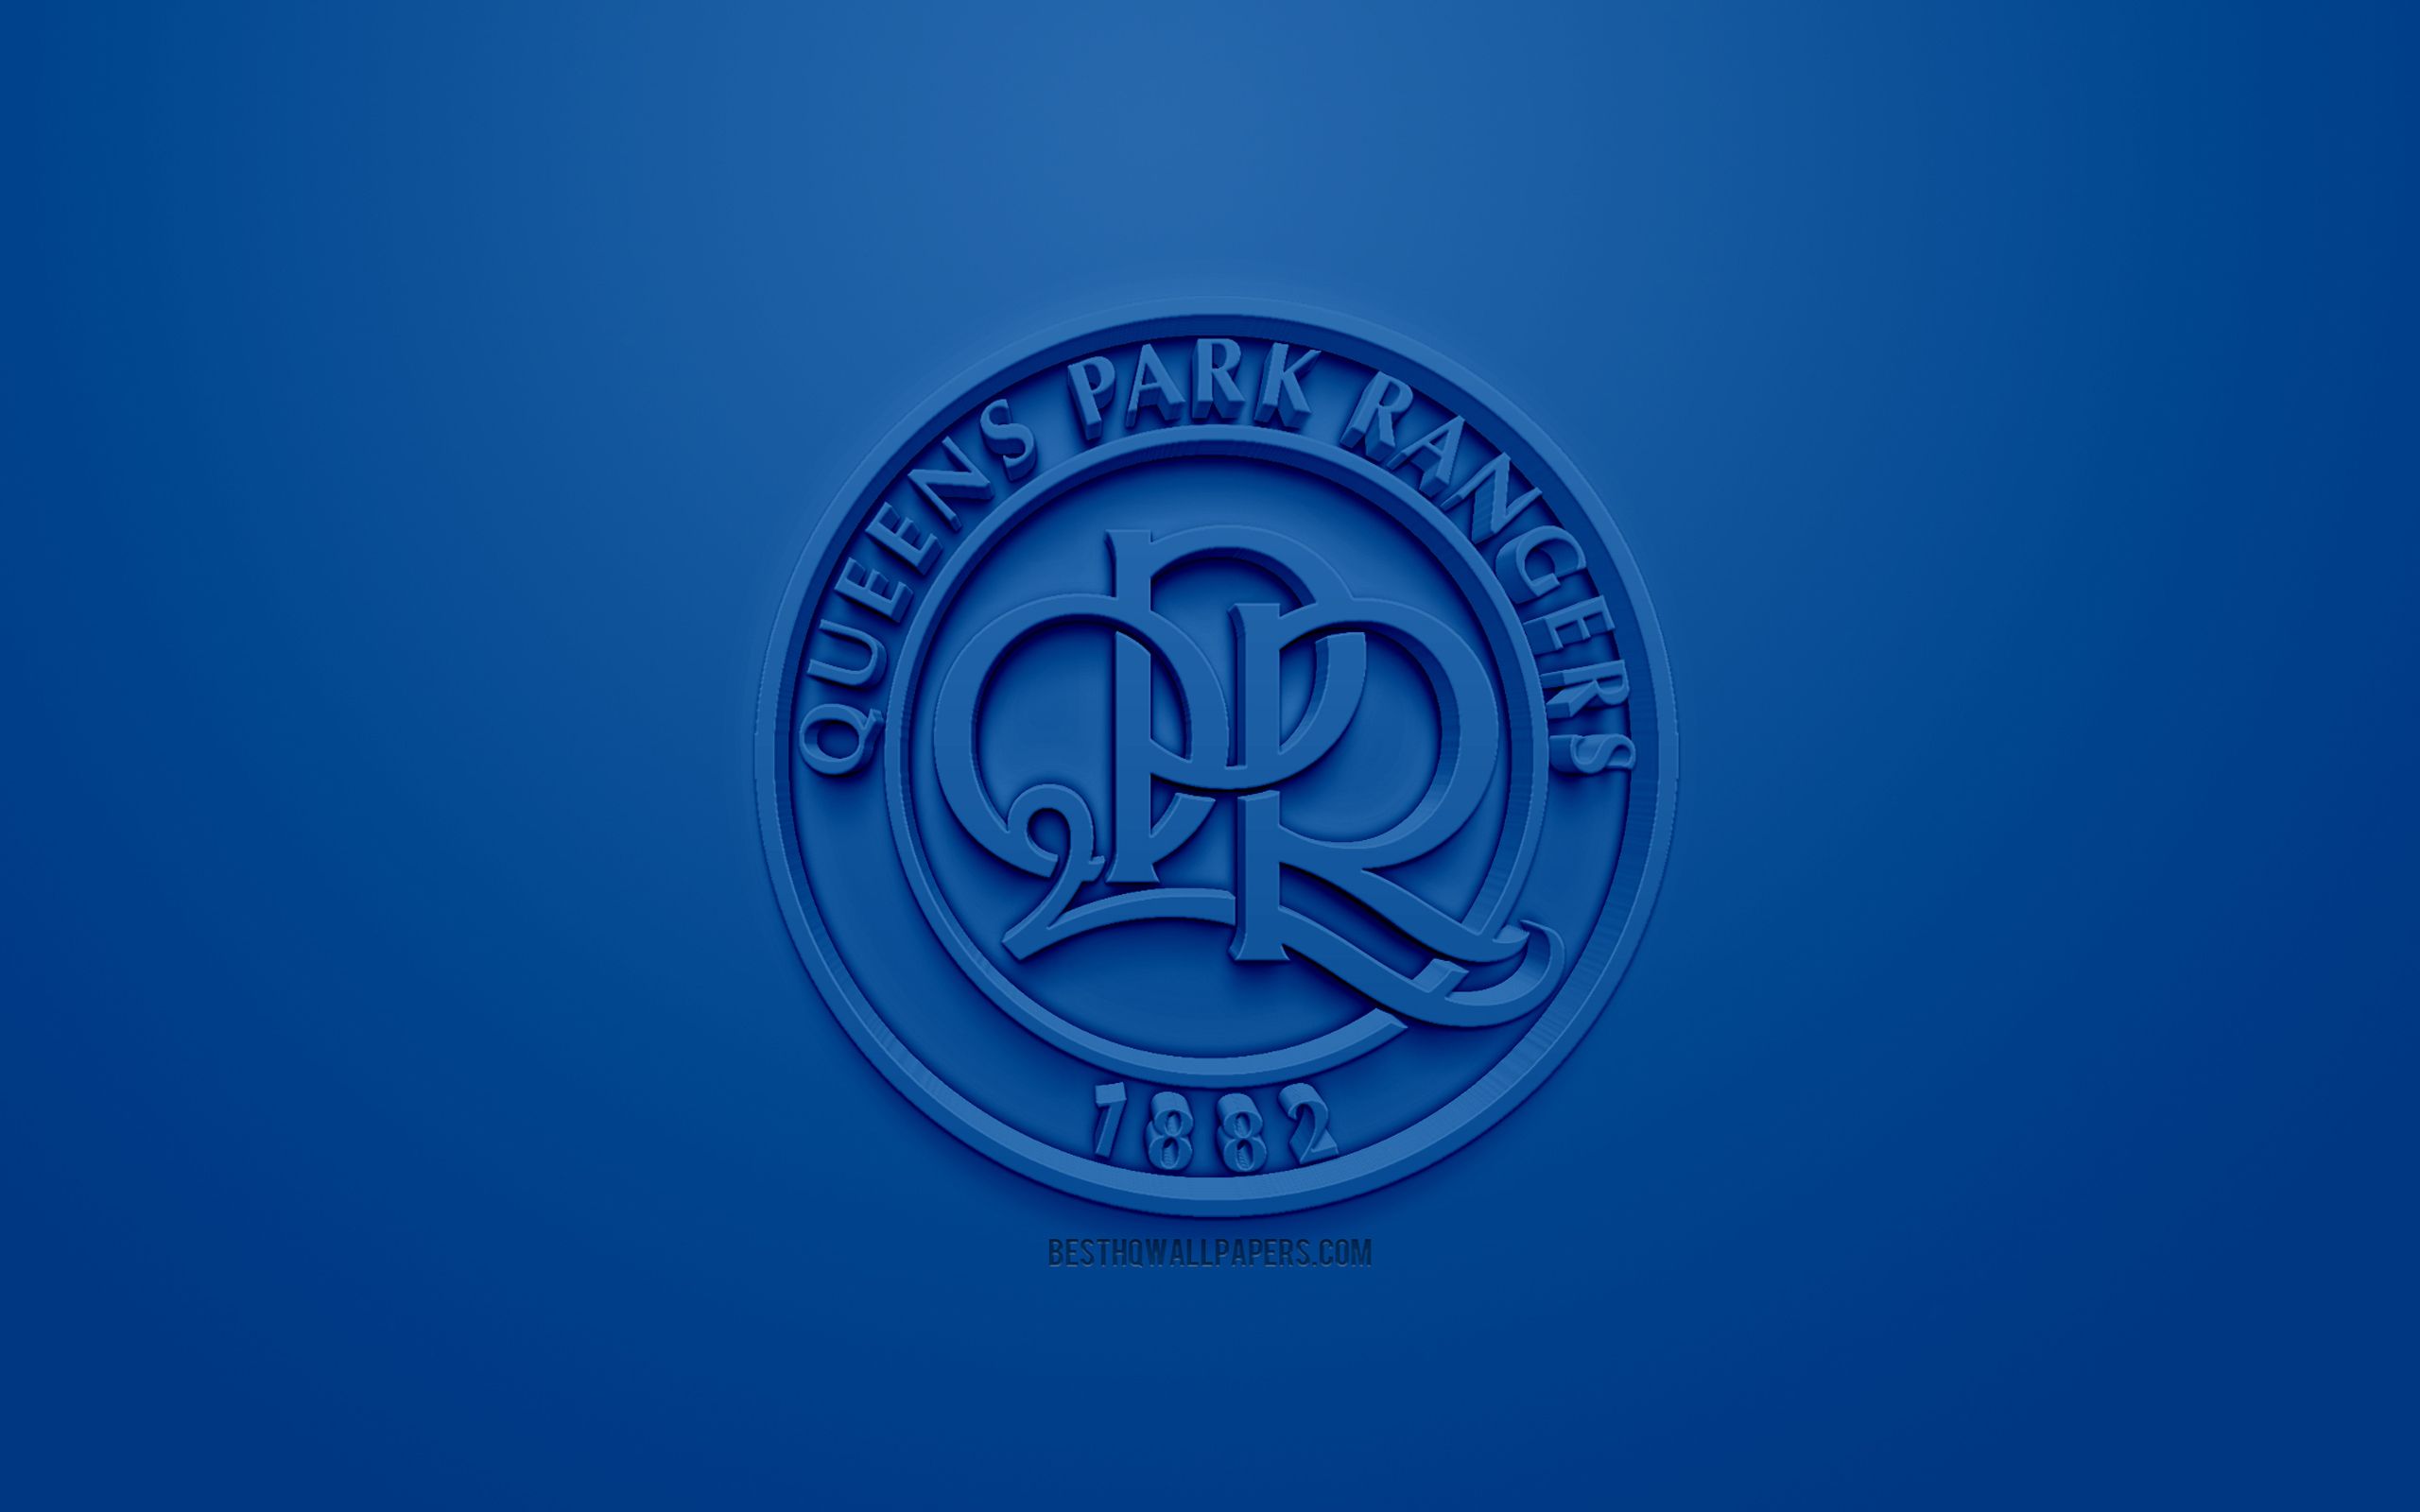 Download wallpaper Queens Park Rangers FC, QPR, creative 3D logo, blue background, 3D emblem, English football club, EFL Championship, White City, London, England, UK, English Football League Championship, 3D art, football, 3D